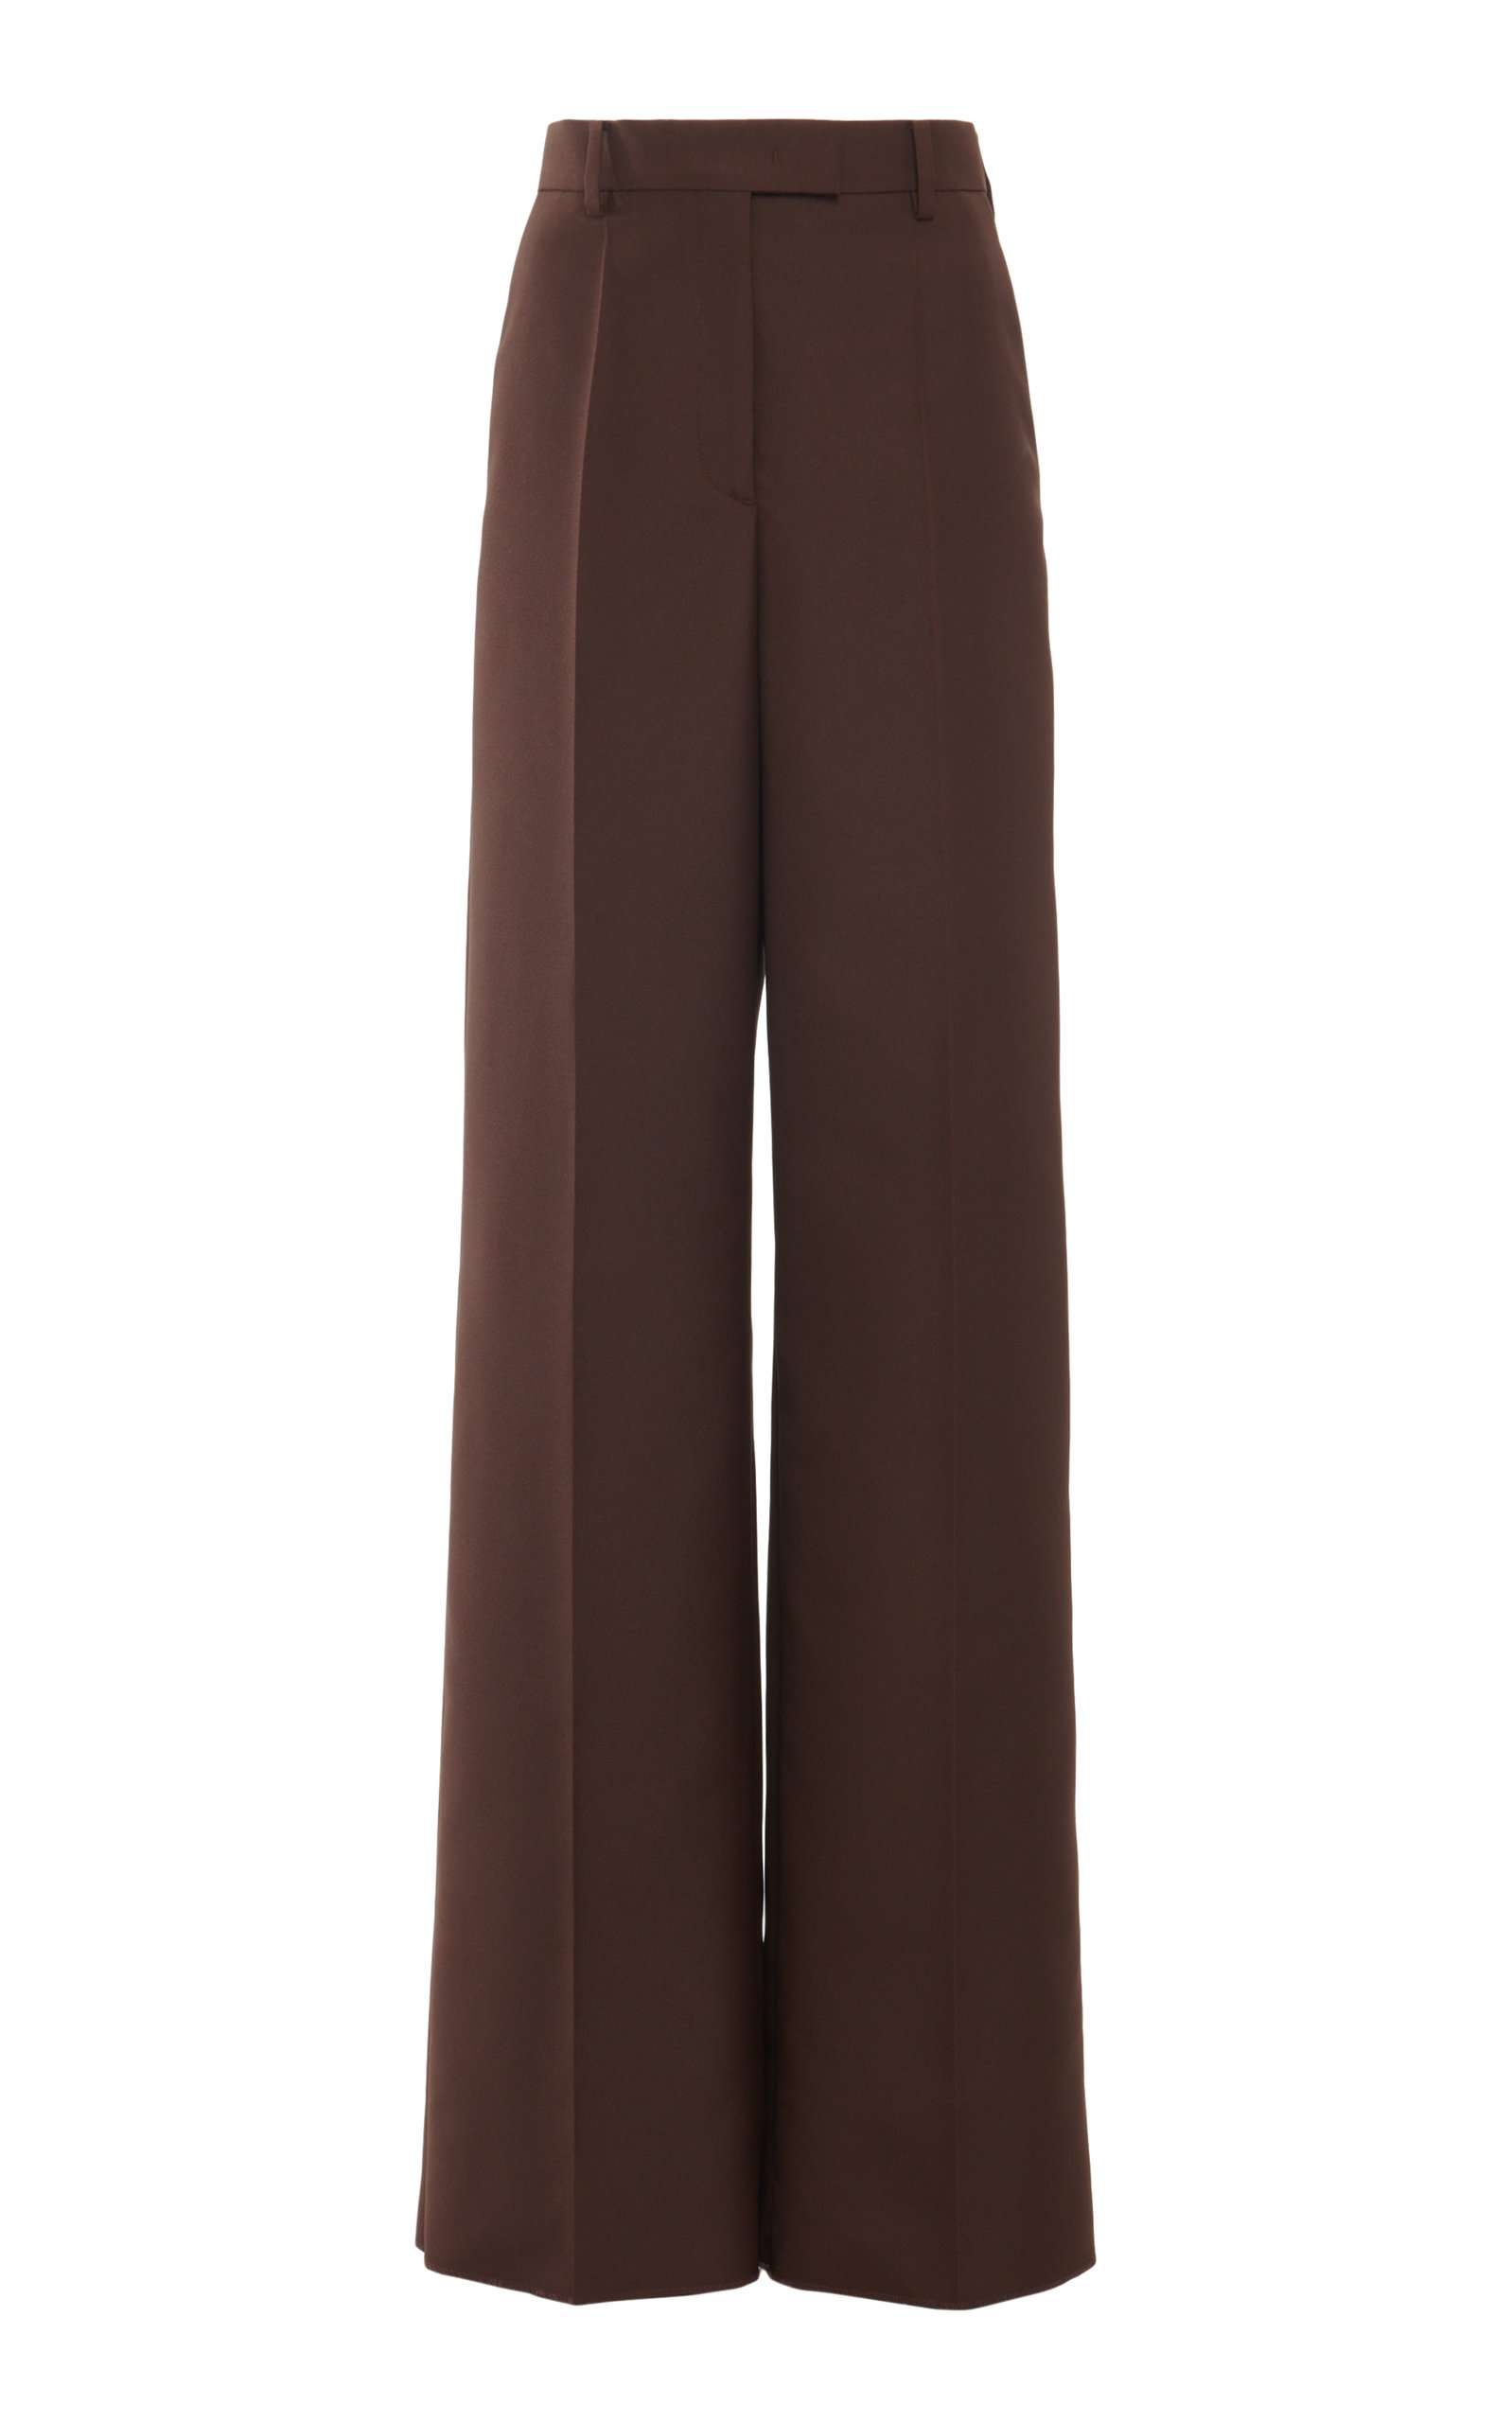 Valentino - Women's Cady Wide-Leg Pants - Brown - IT 40 - Moda Operandi